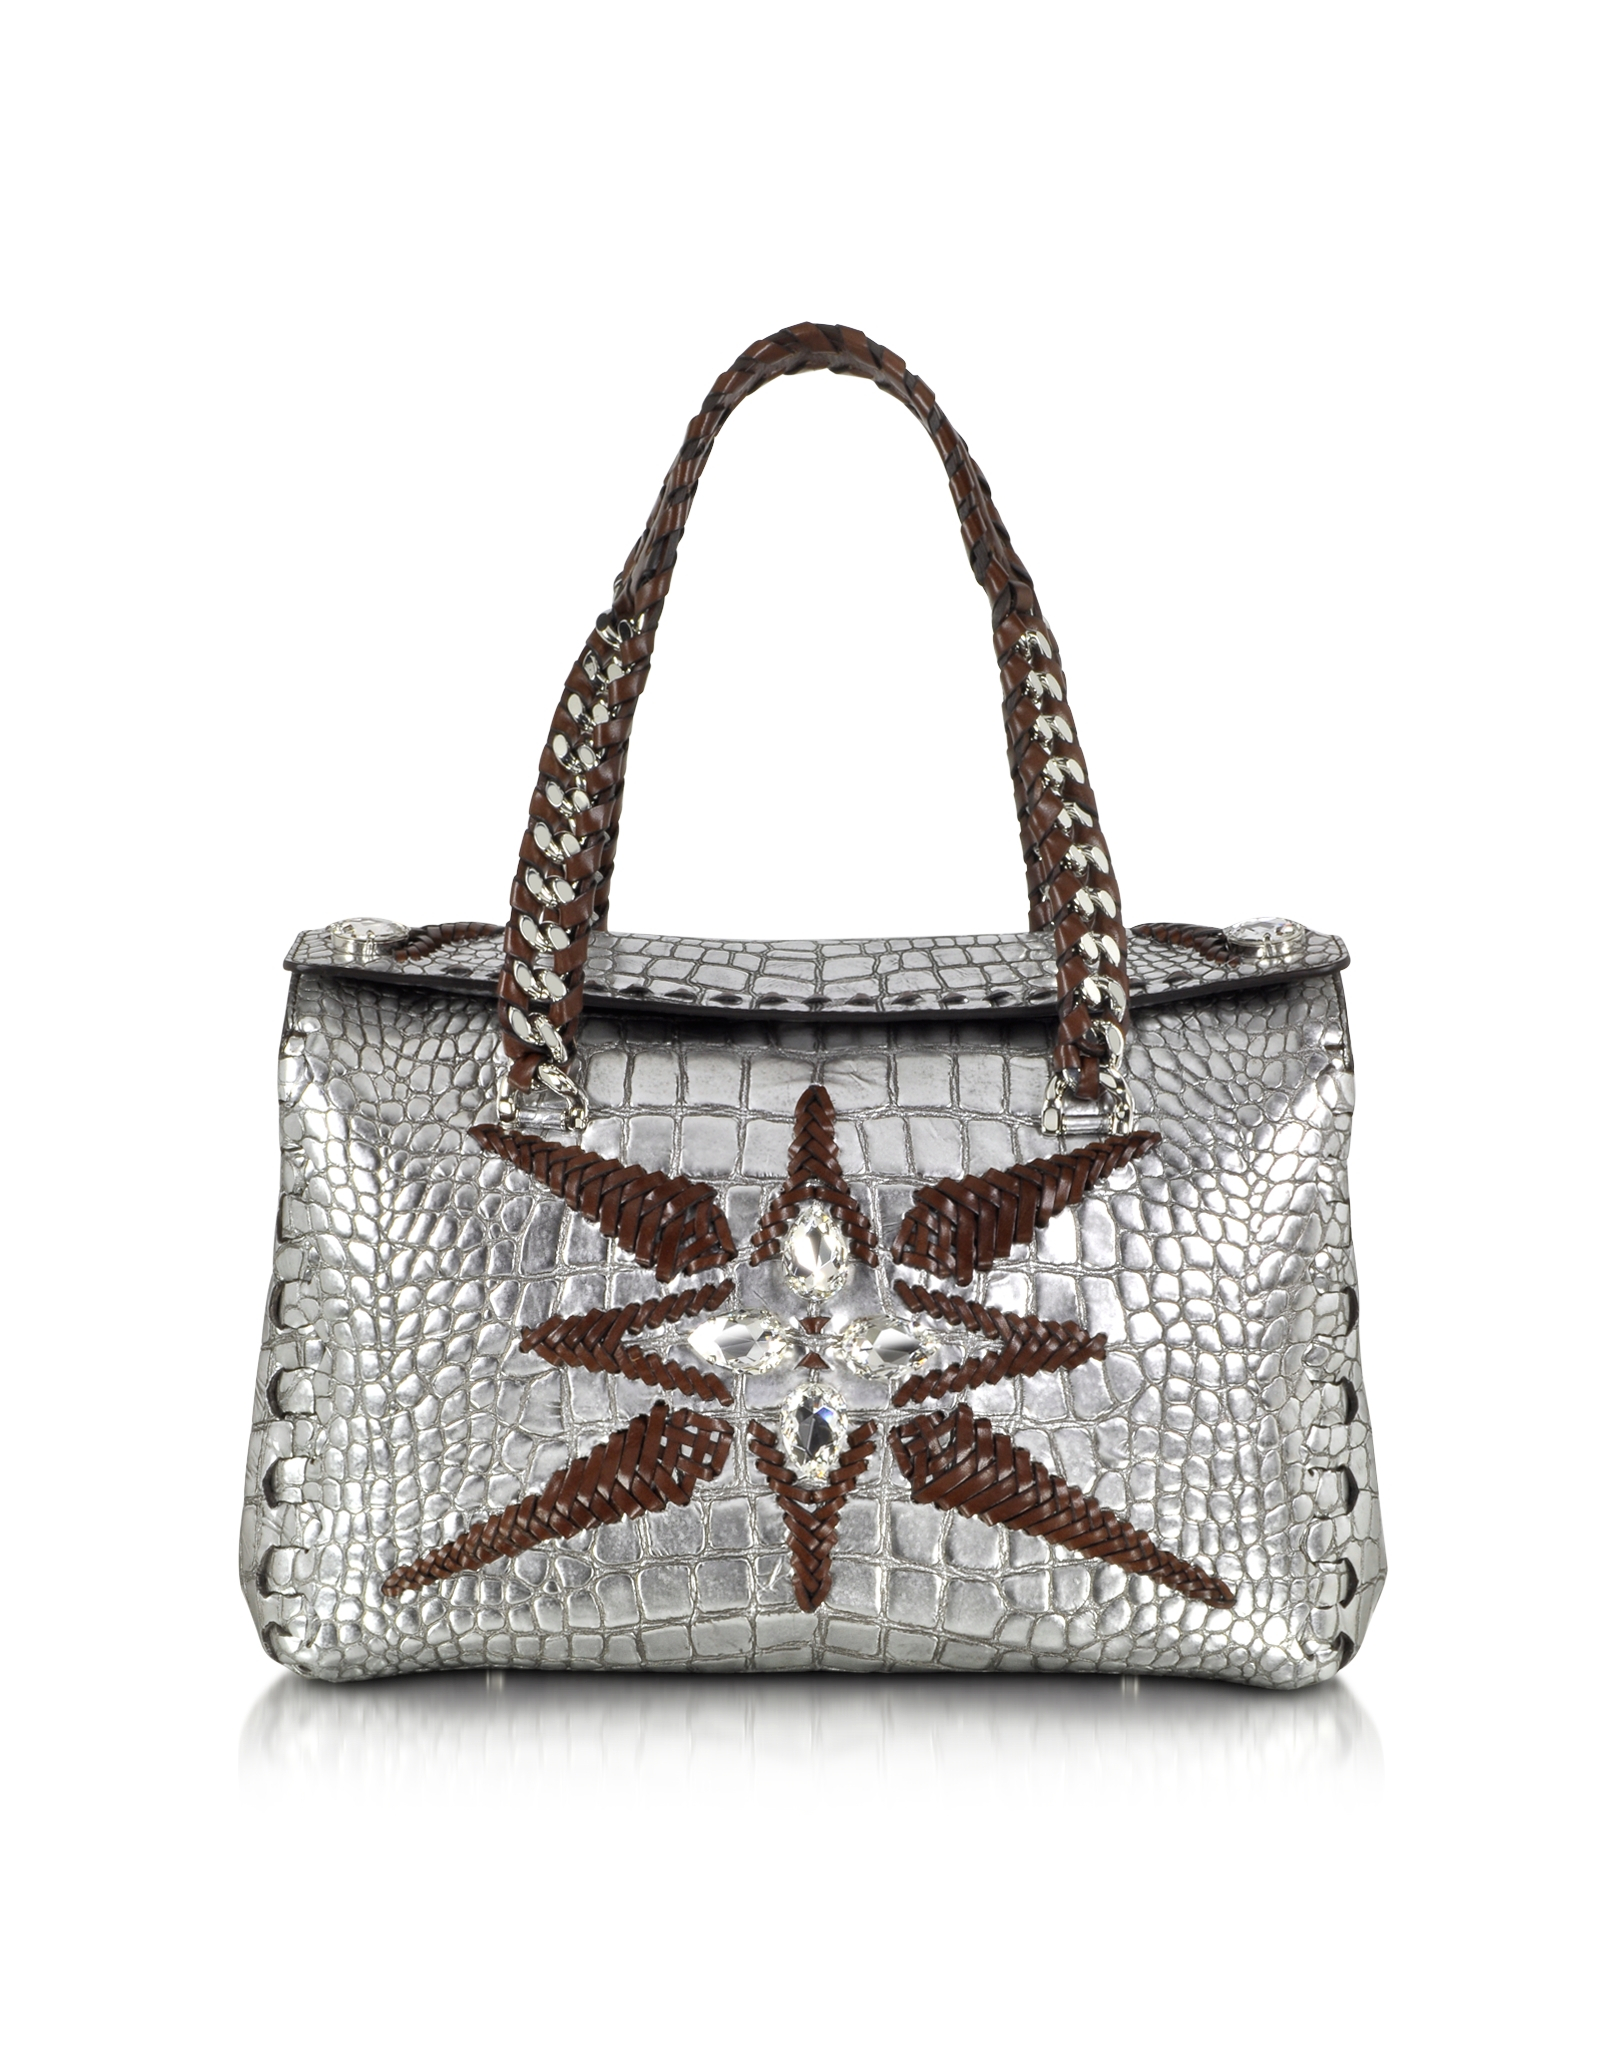 Lyst - Roberto cavalli Regina Silver Embossed Croco Leather Handbag W/crystals in Metallic